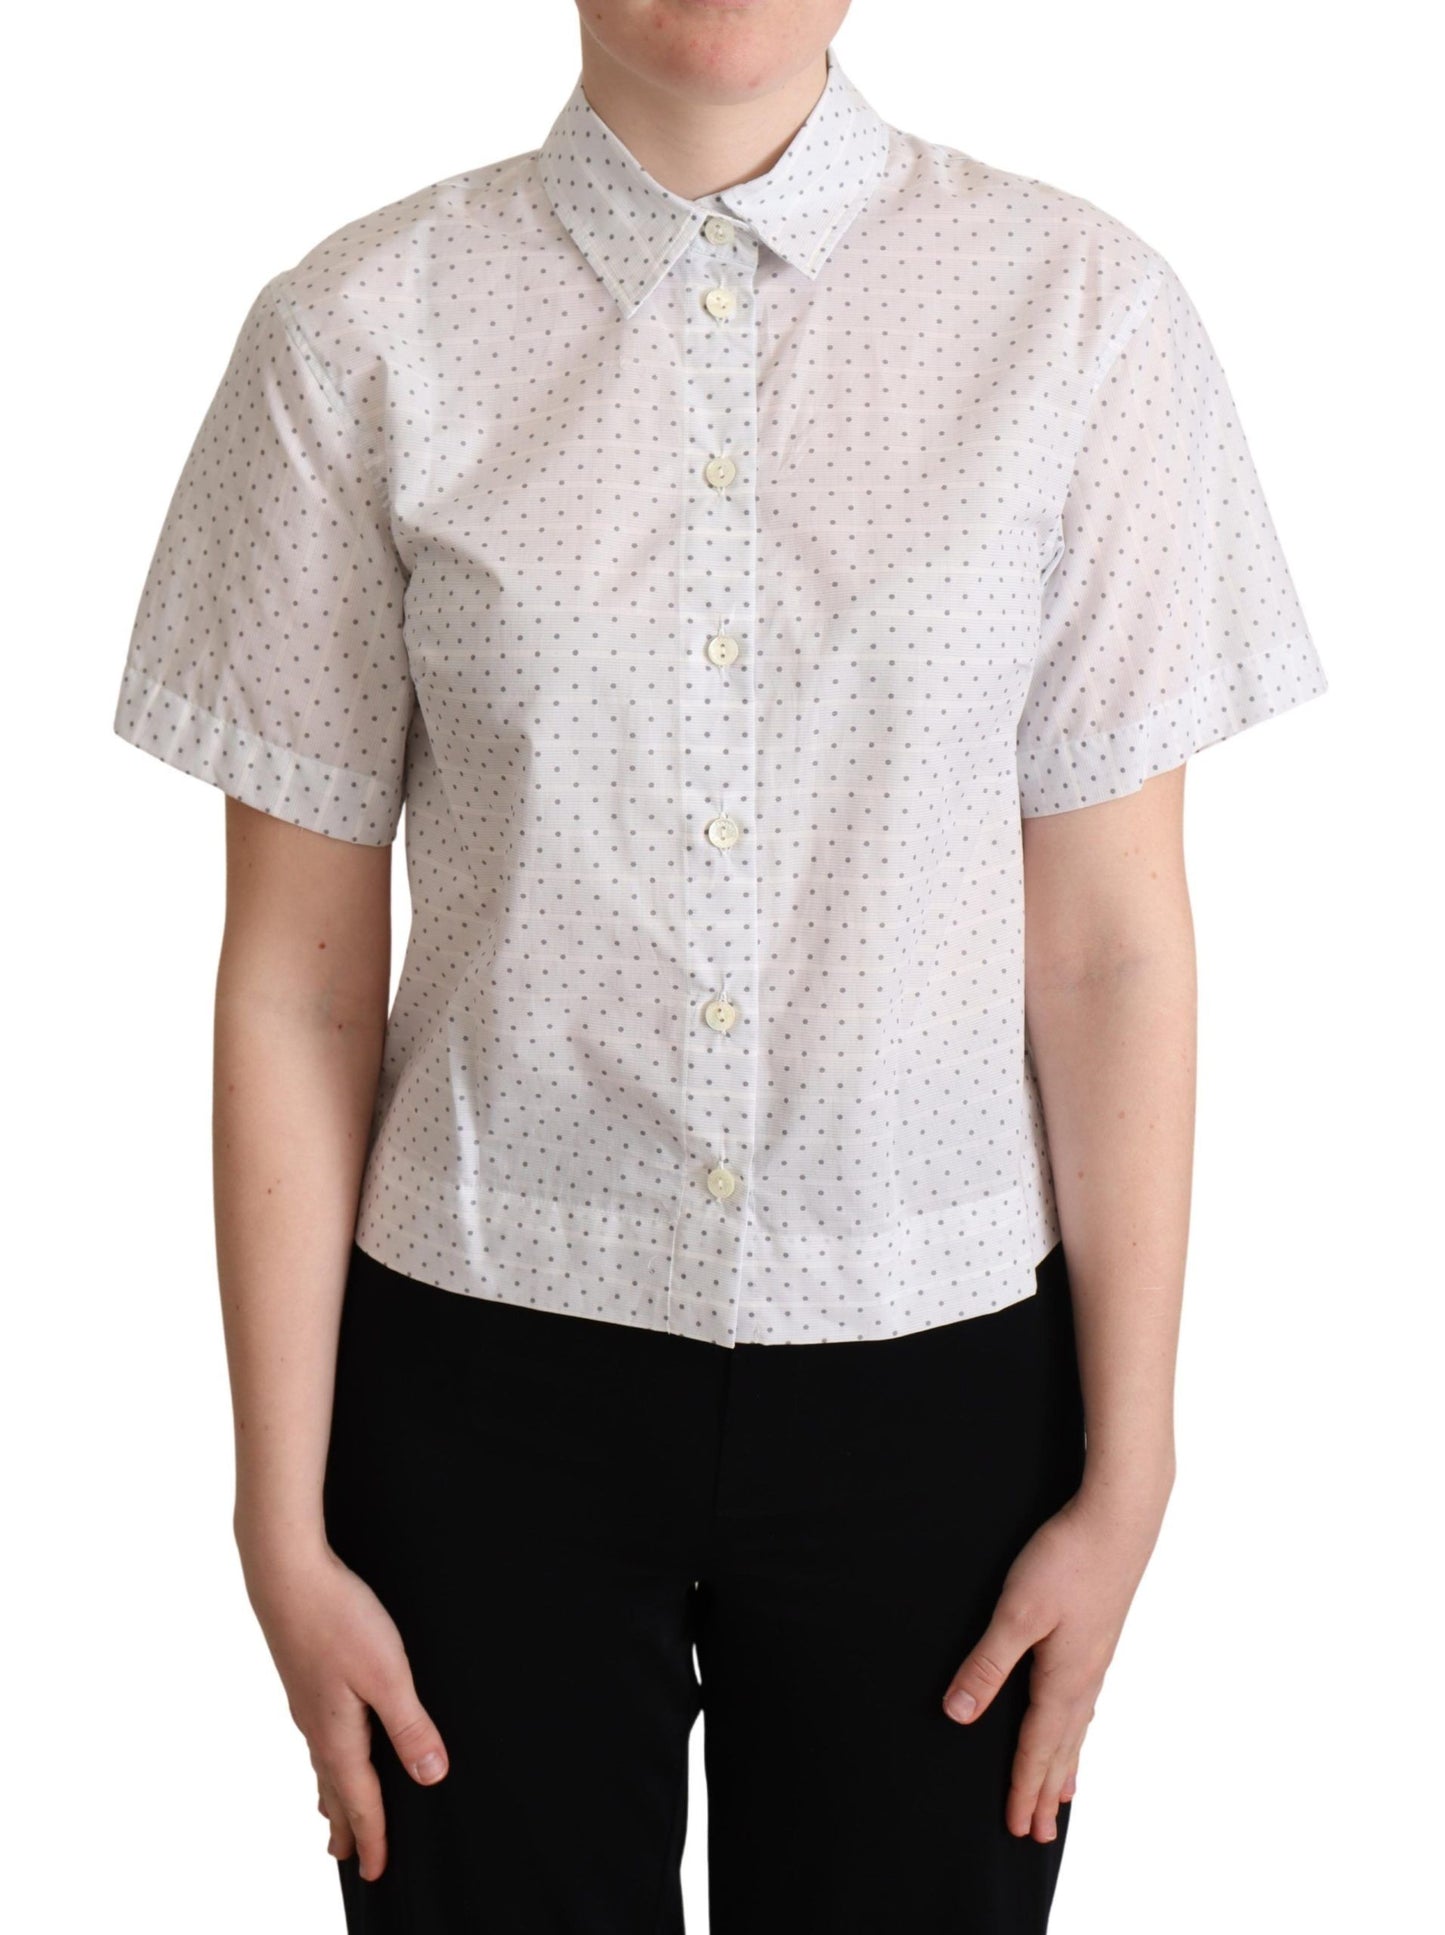 White Black Polka Dots Collar Blouse Shirt